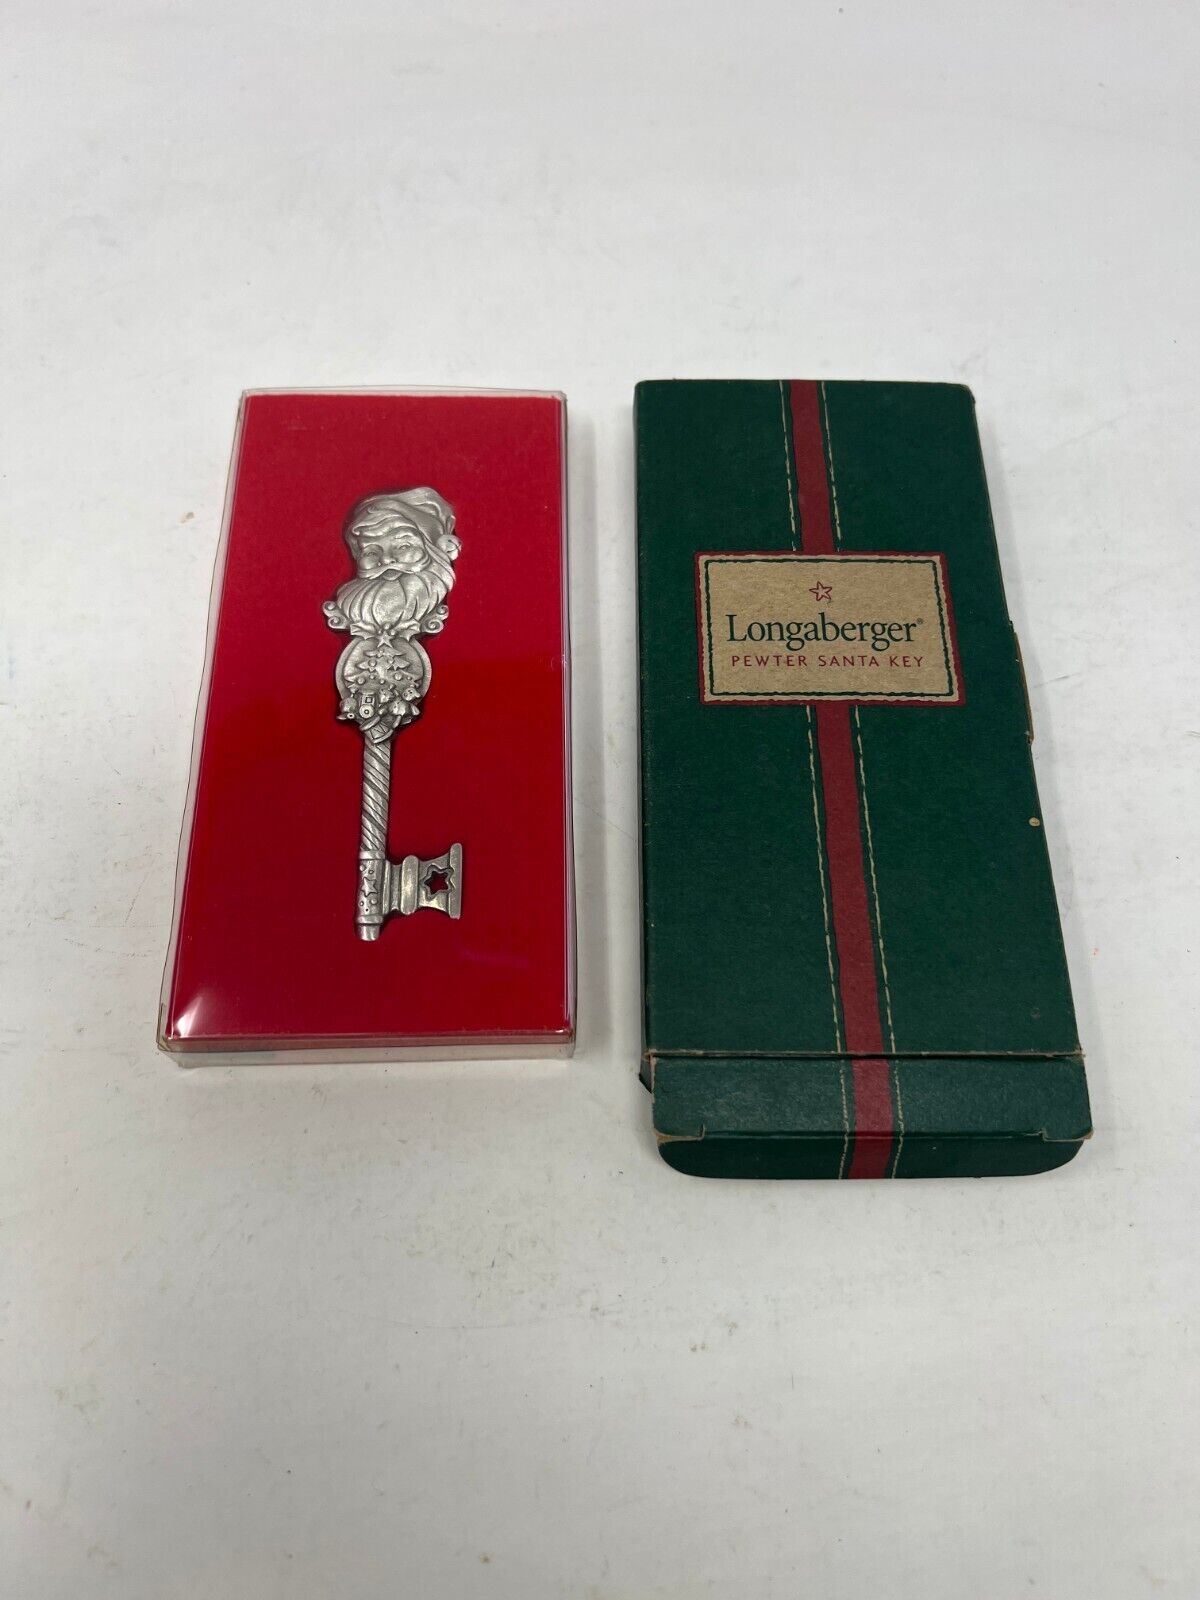 Longaberger 2001 Pewter Santa Key*CHRISTMAS*CHILDREN*TREE ORNAMENT*NEW IN BOX